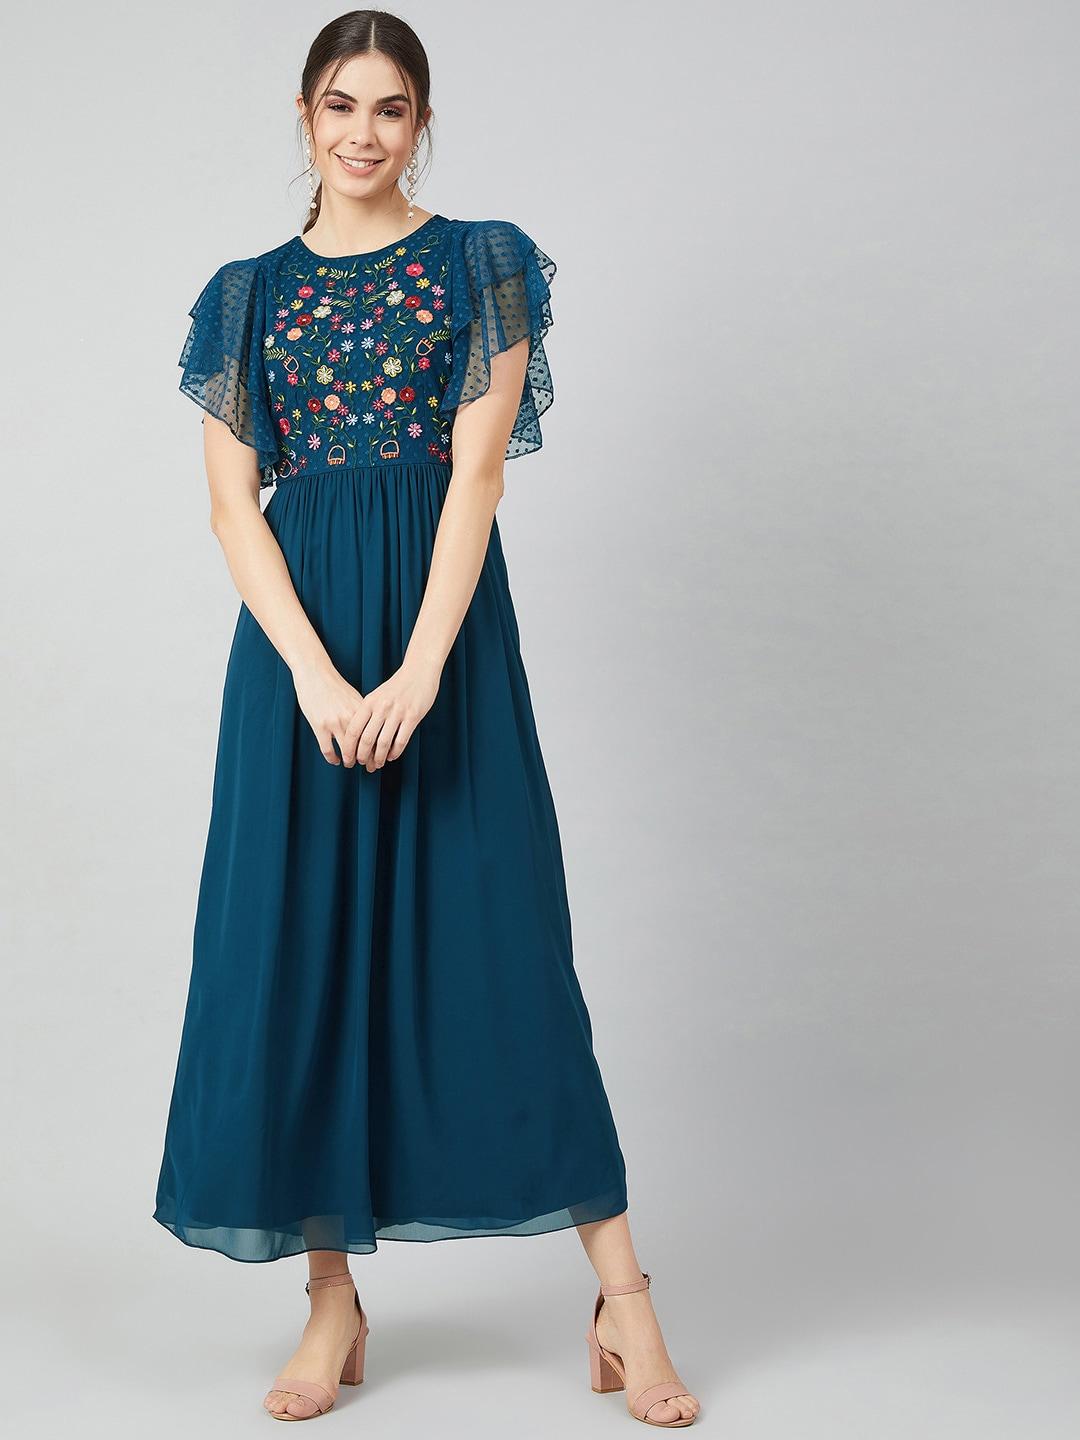 Athena Blue Embroidered Maxi Dress